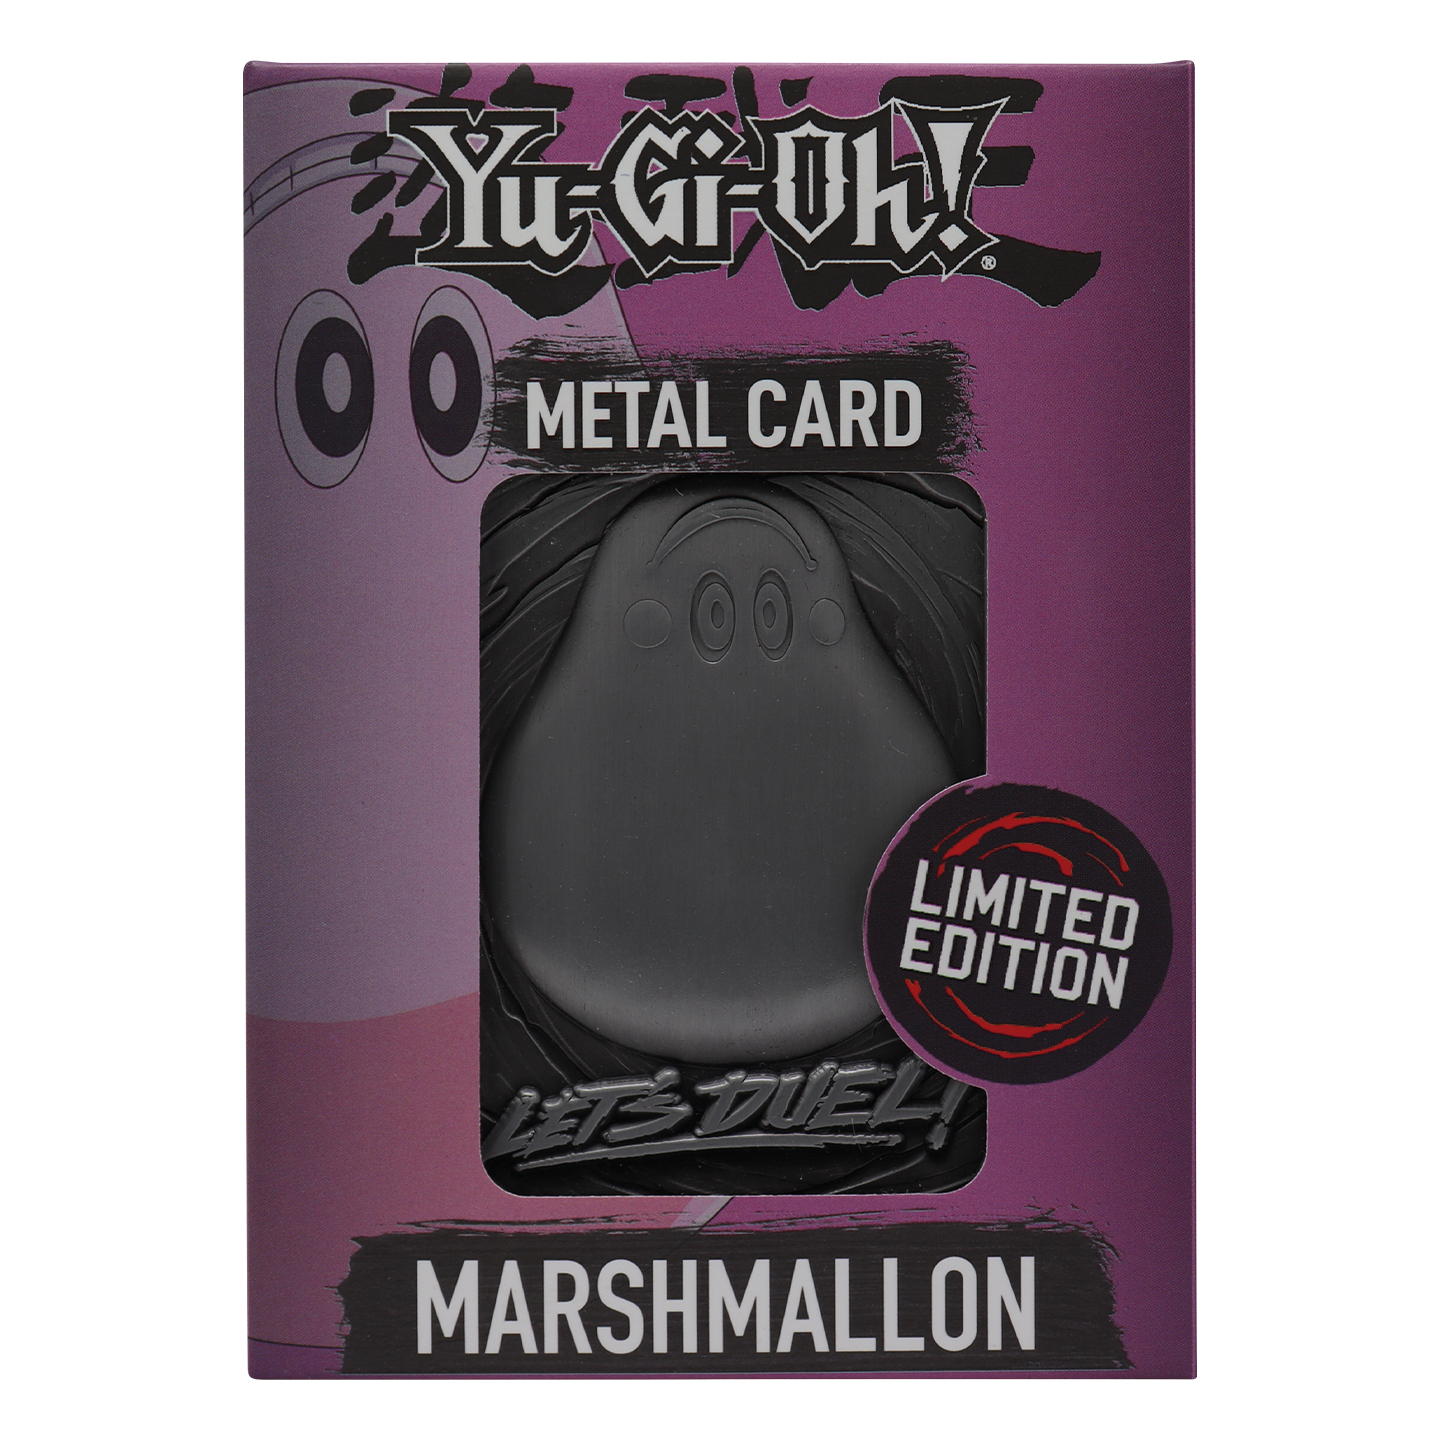 Limited Edition Card Marshmallon